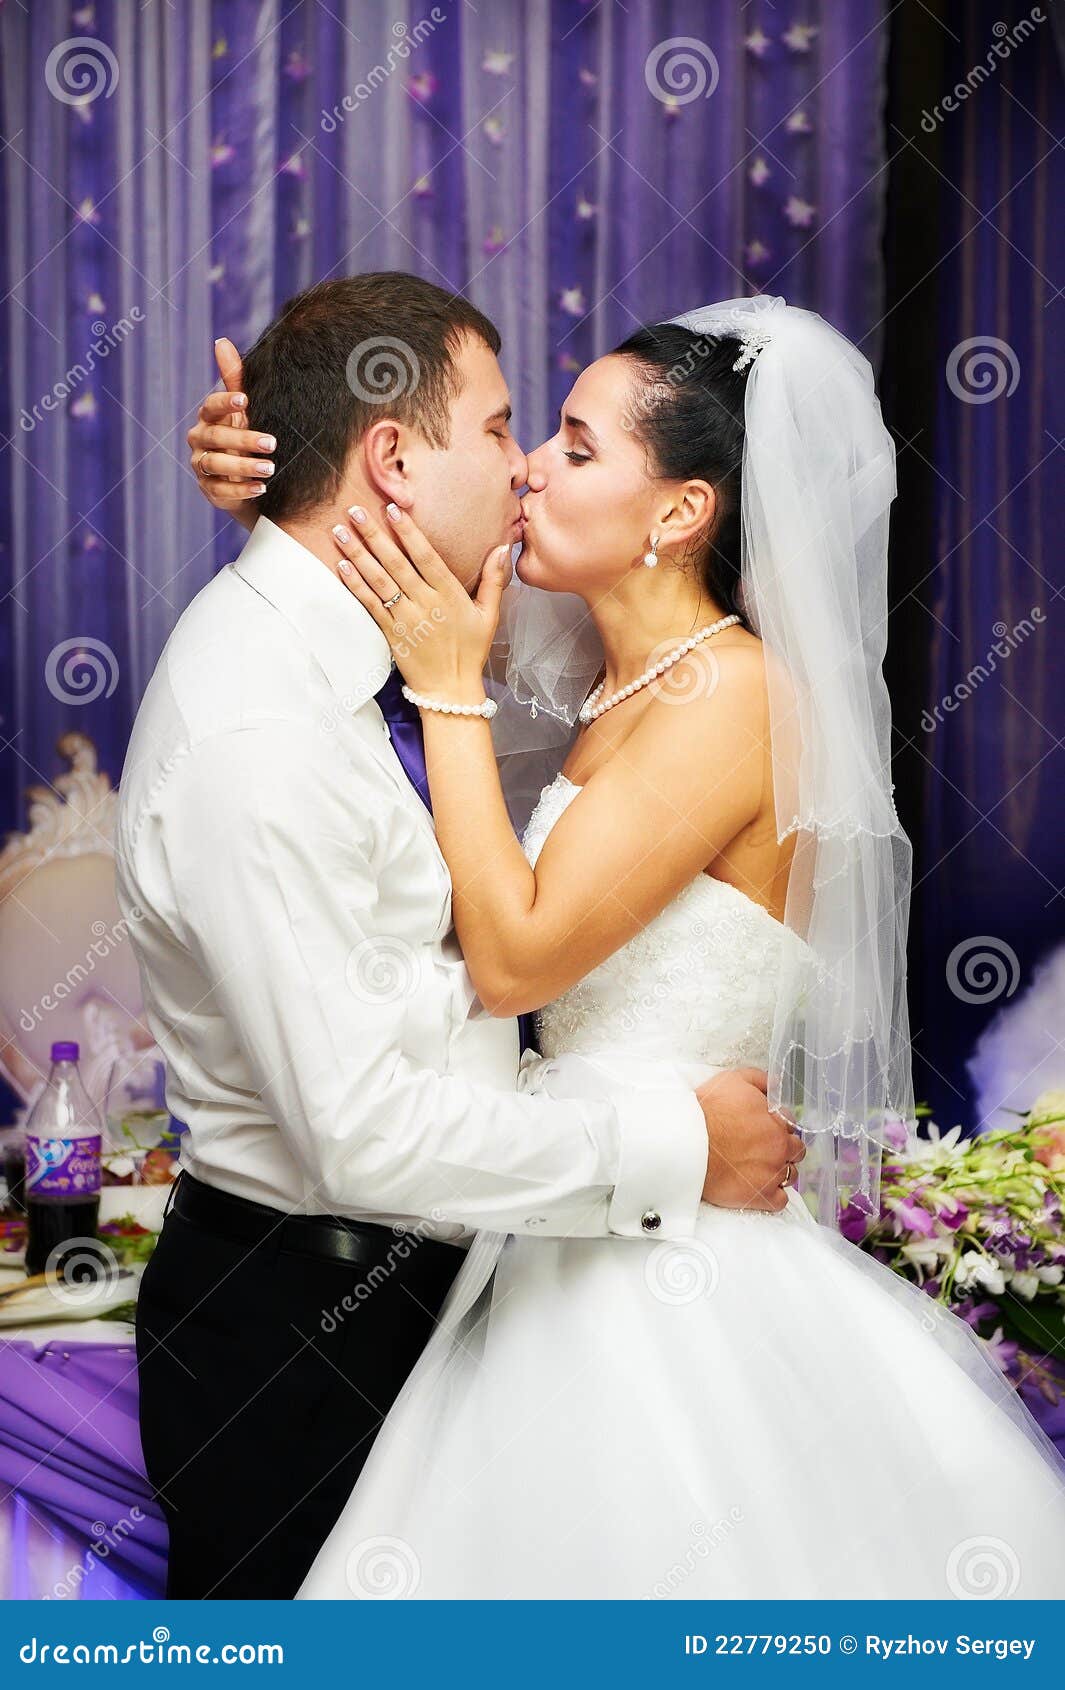 kiss the bride formal wear